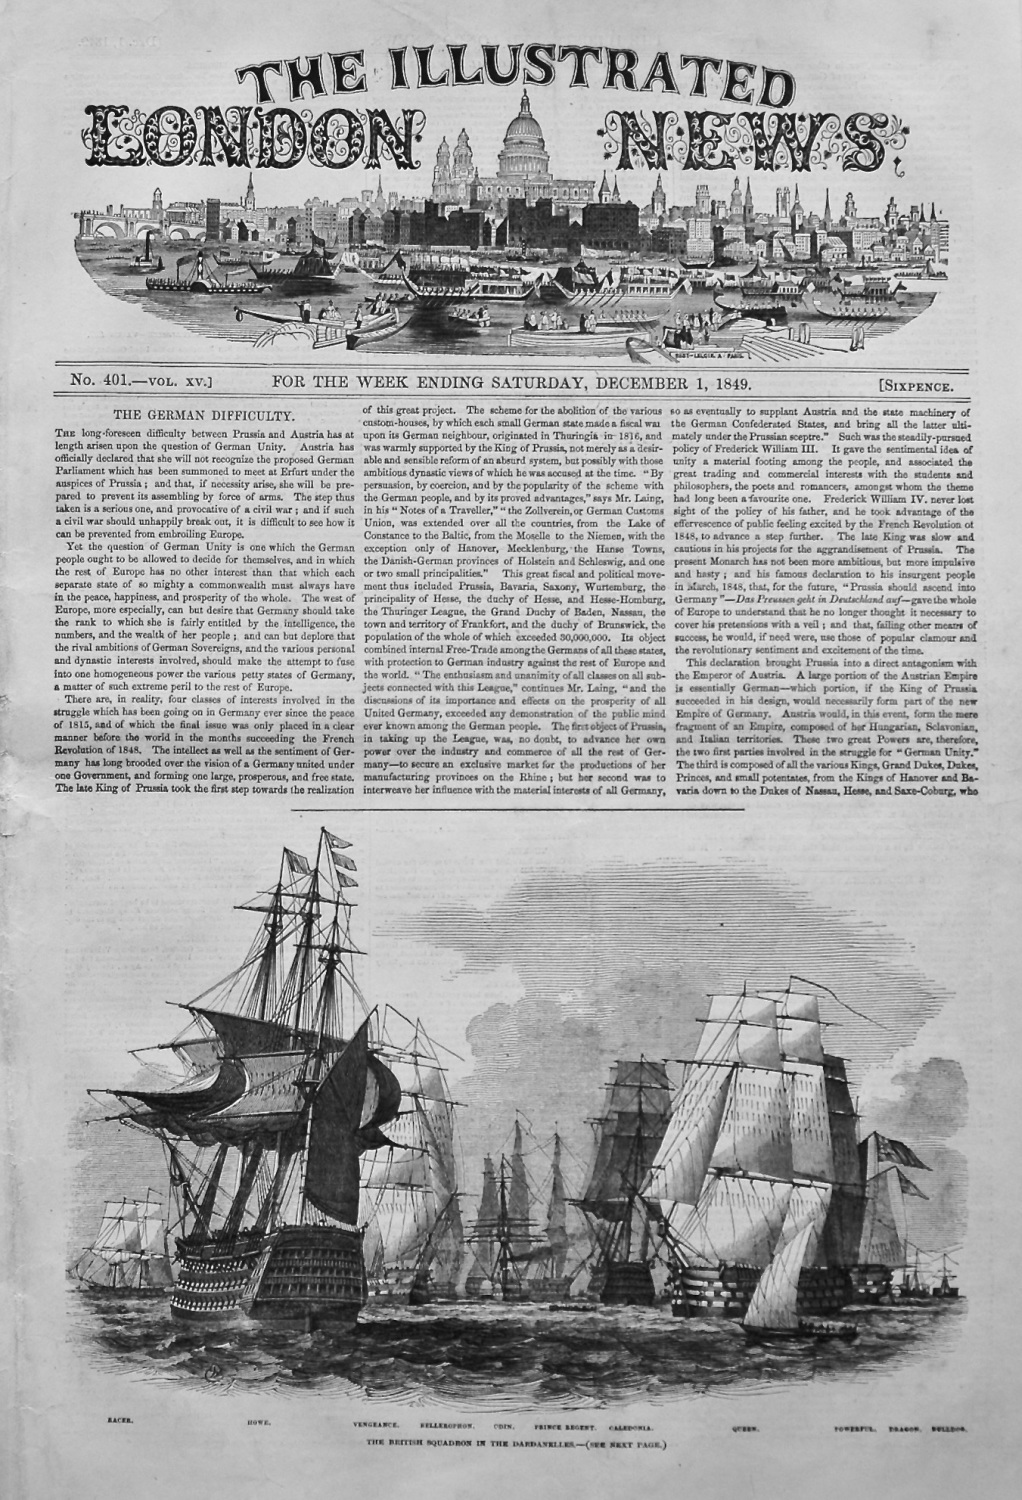 Illustrated London News. December 1st, 1849.